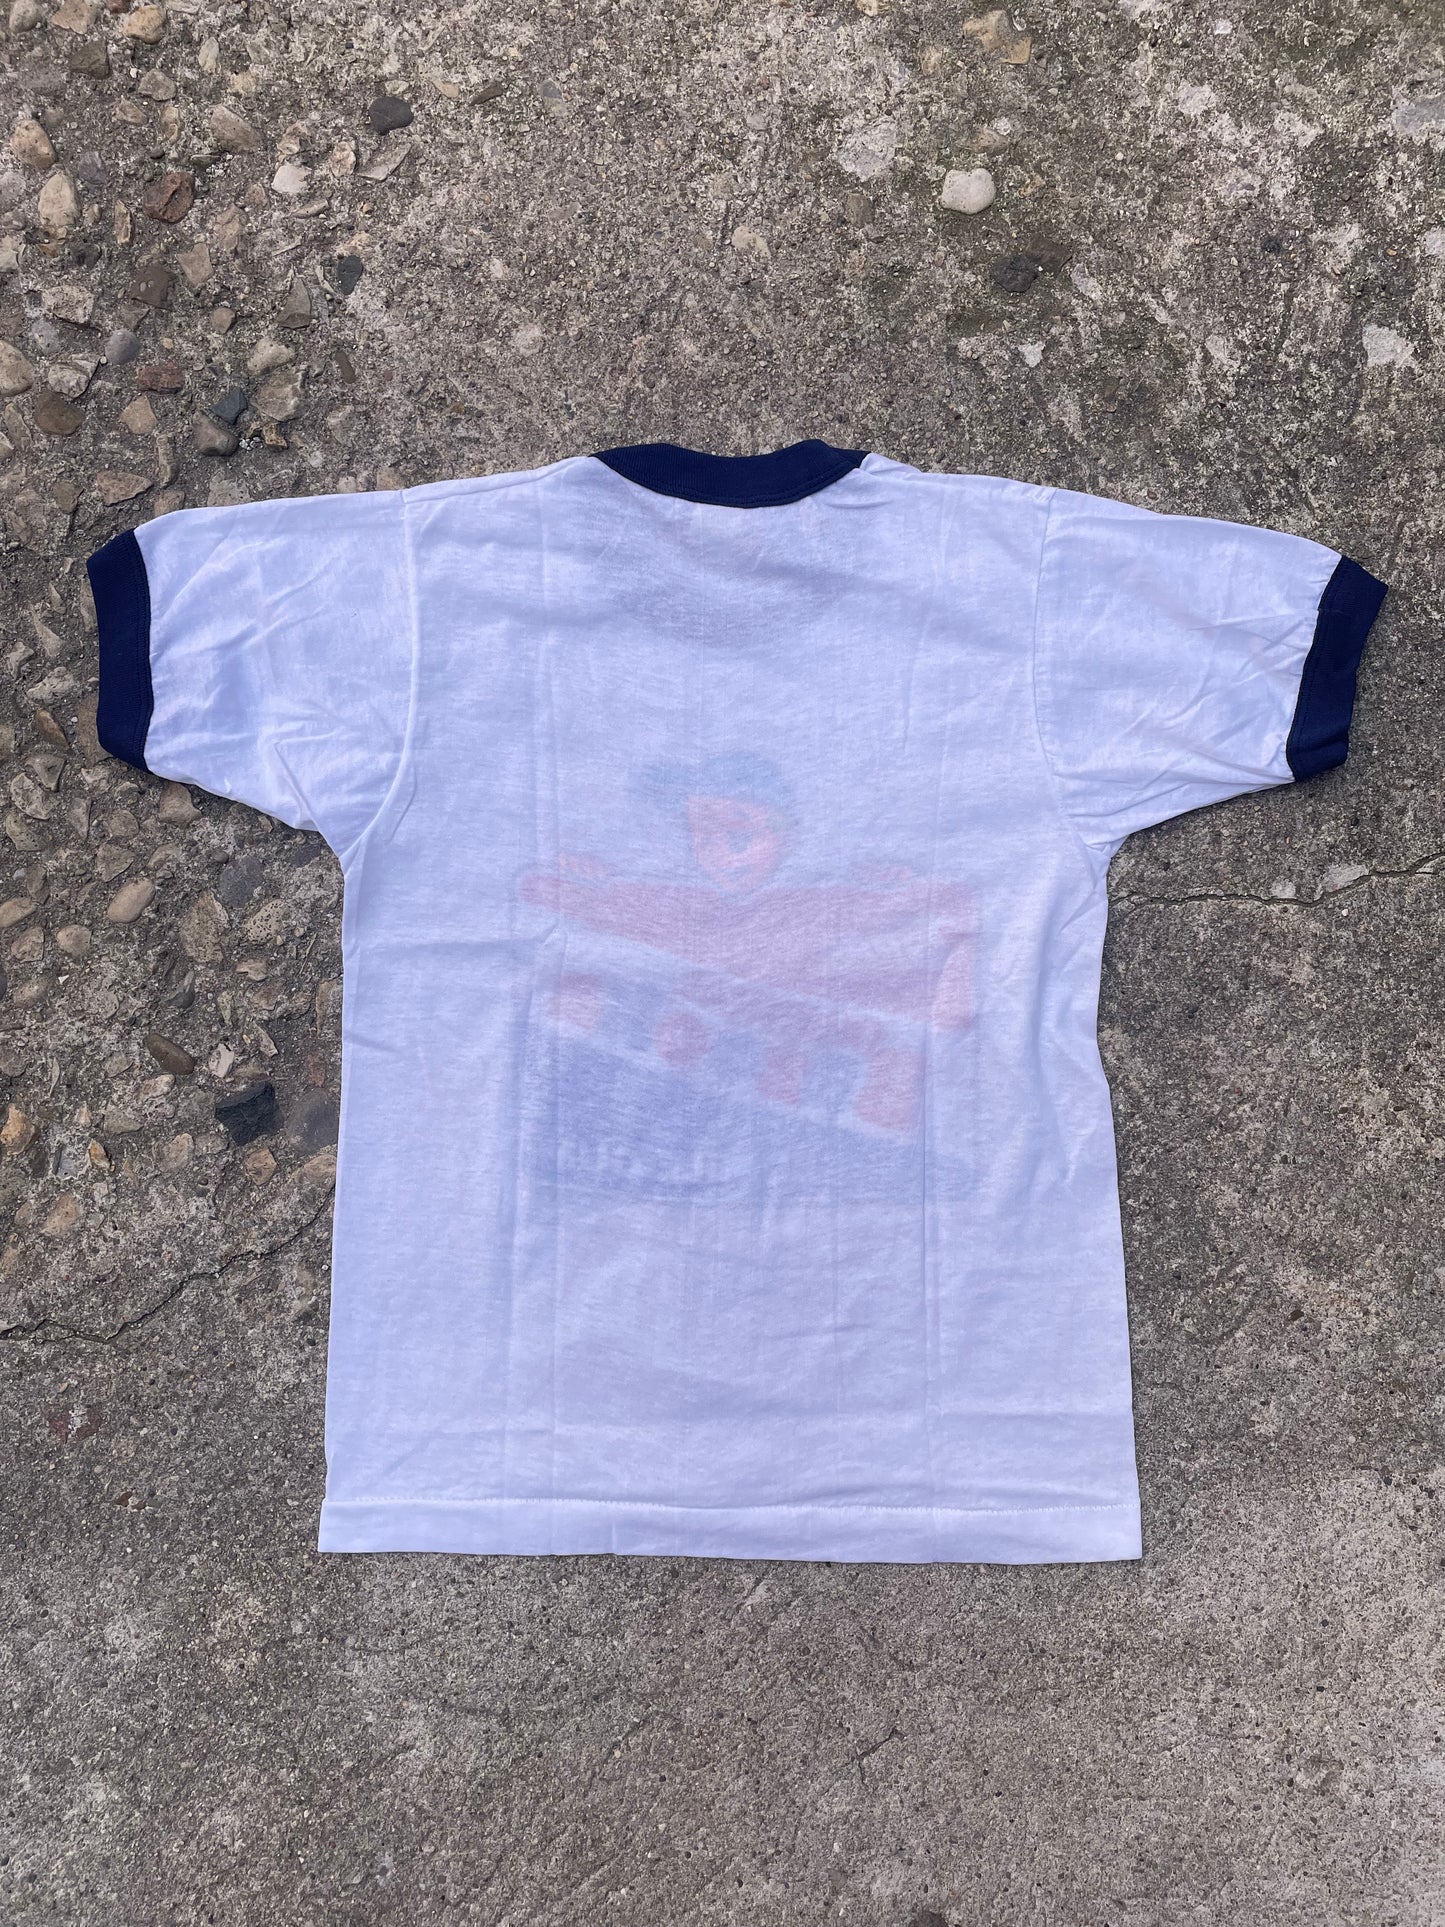 1986 Bazooka Bubble Gum Ringer Baby T-Shirt - S